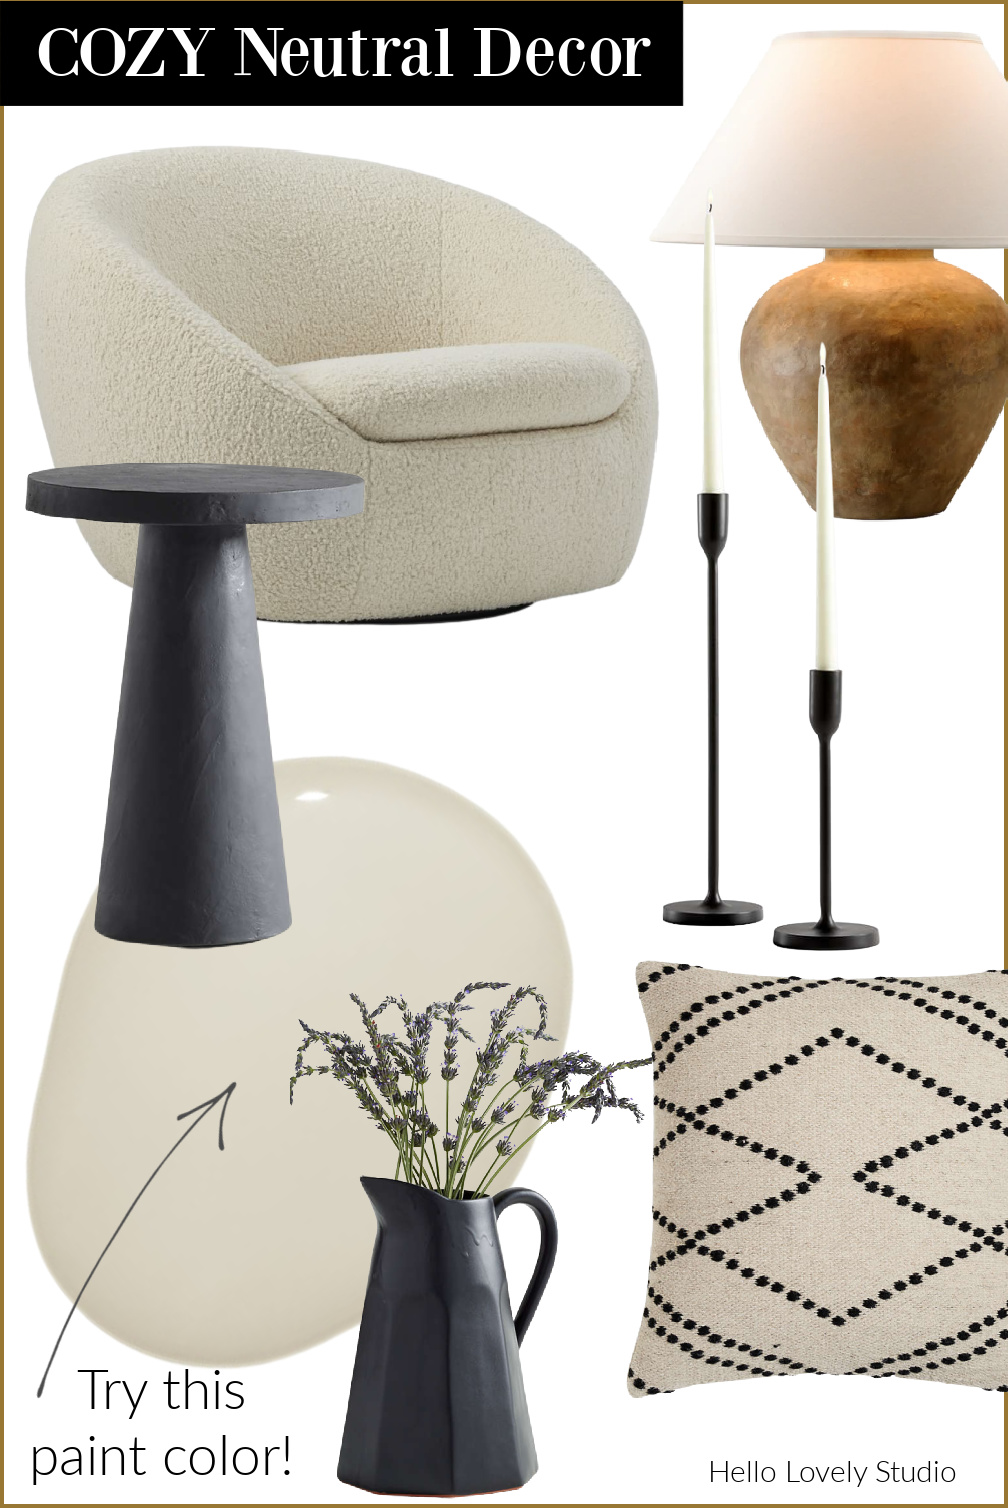 Cozy Neutral Decor for Home - Hello Lovely Studio. #interiordesign #furniture #decoratingideas